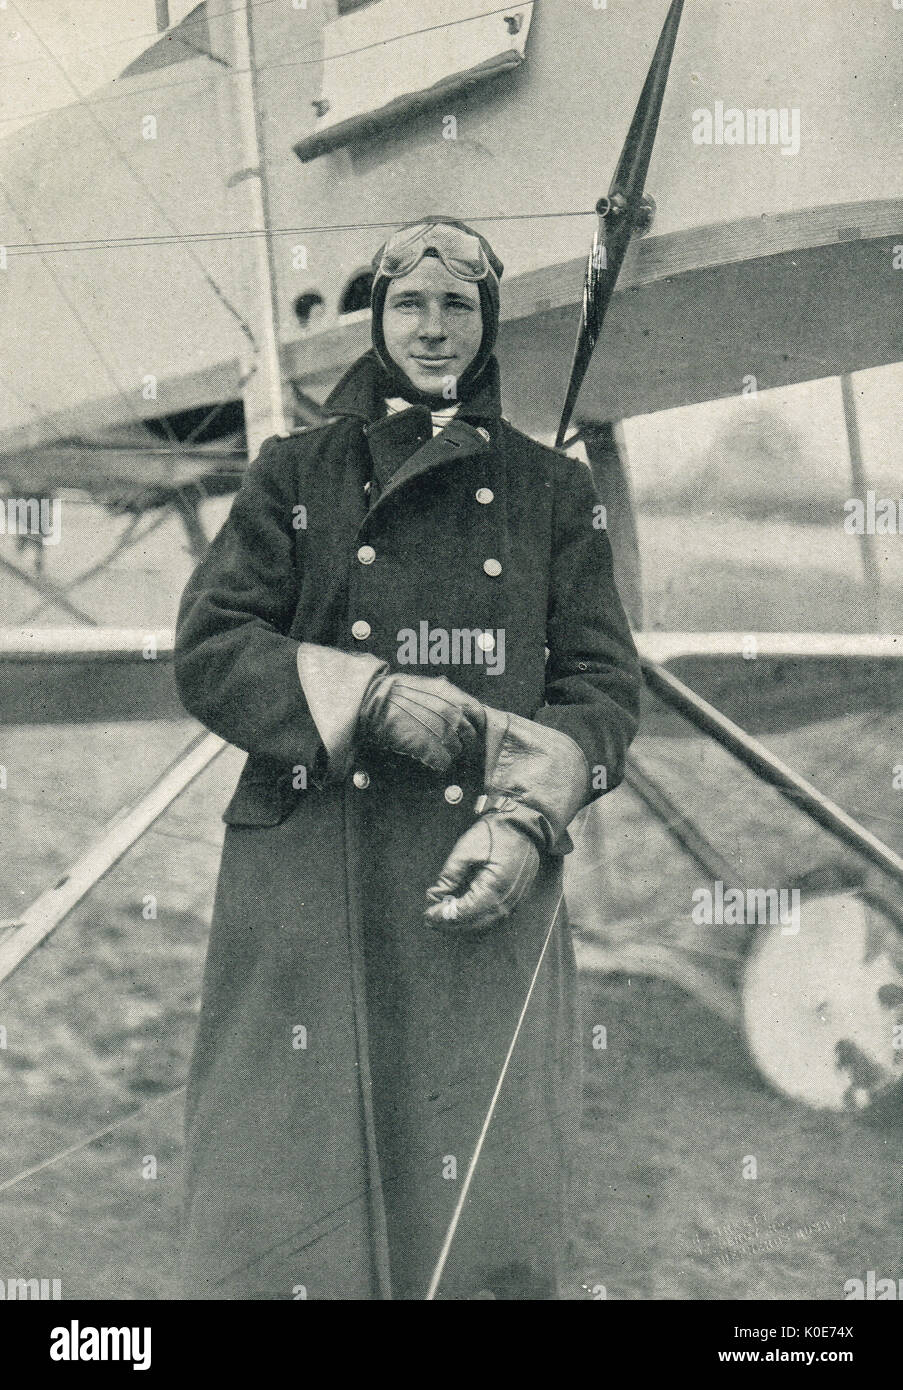 National Hero pilot ace John Warneford VC Stock Photo